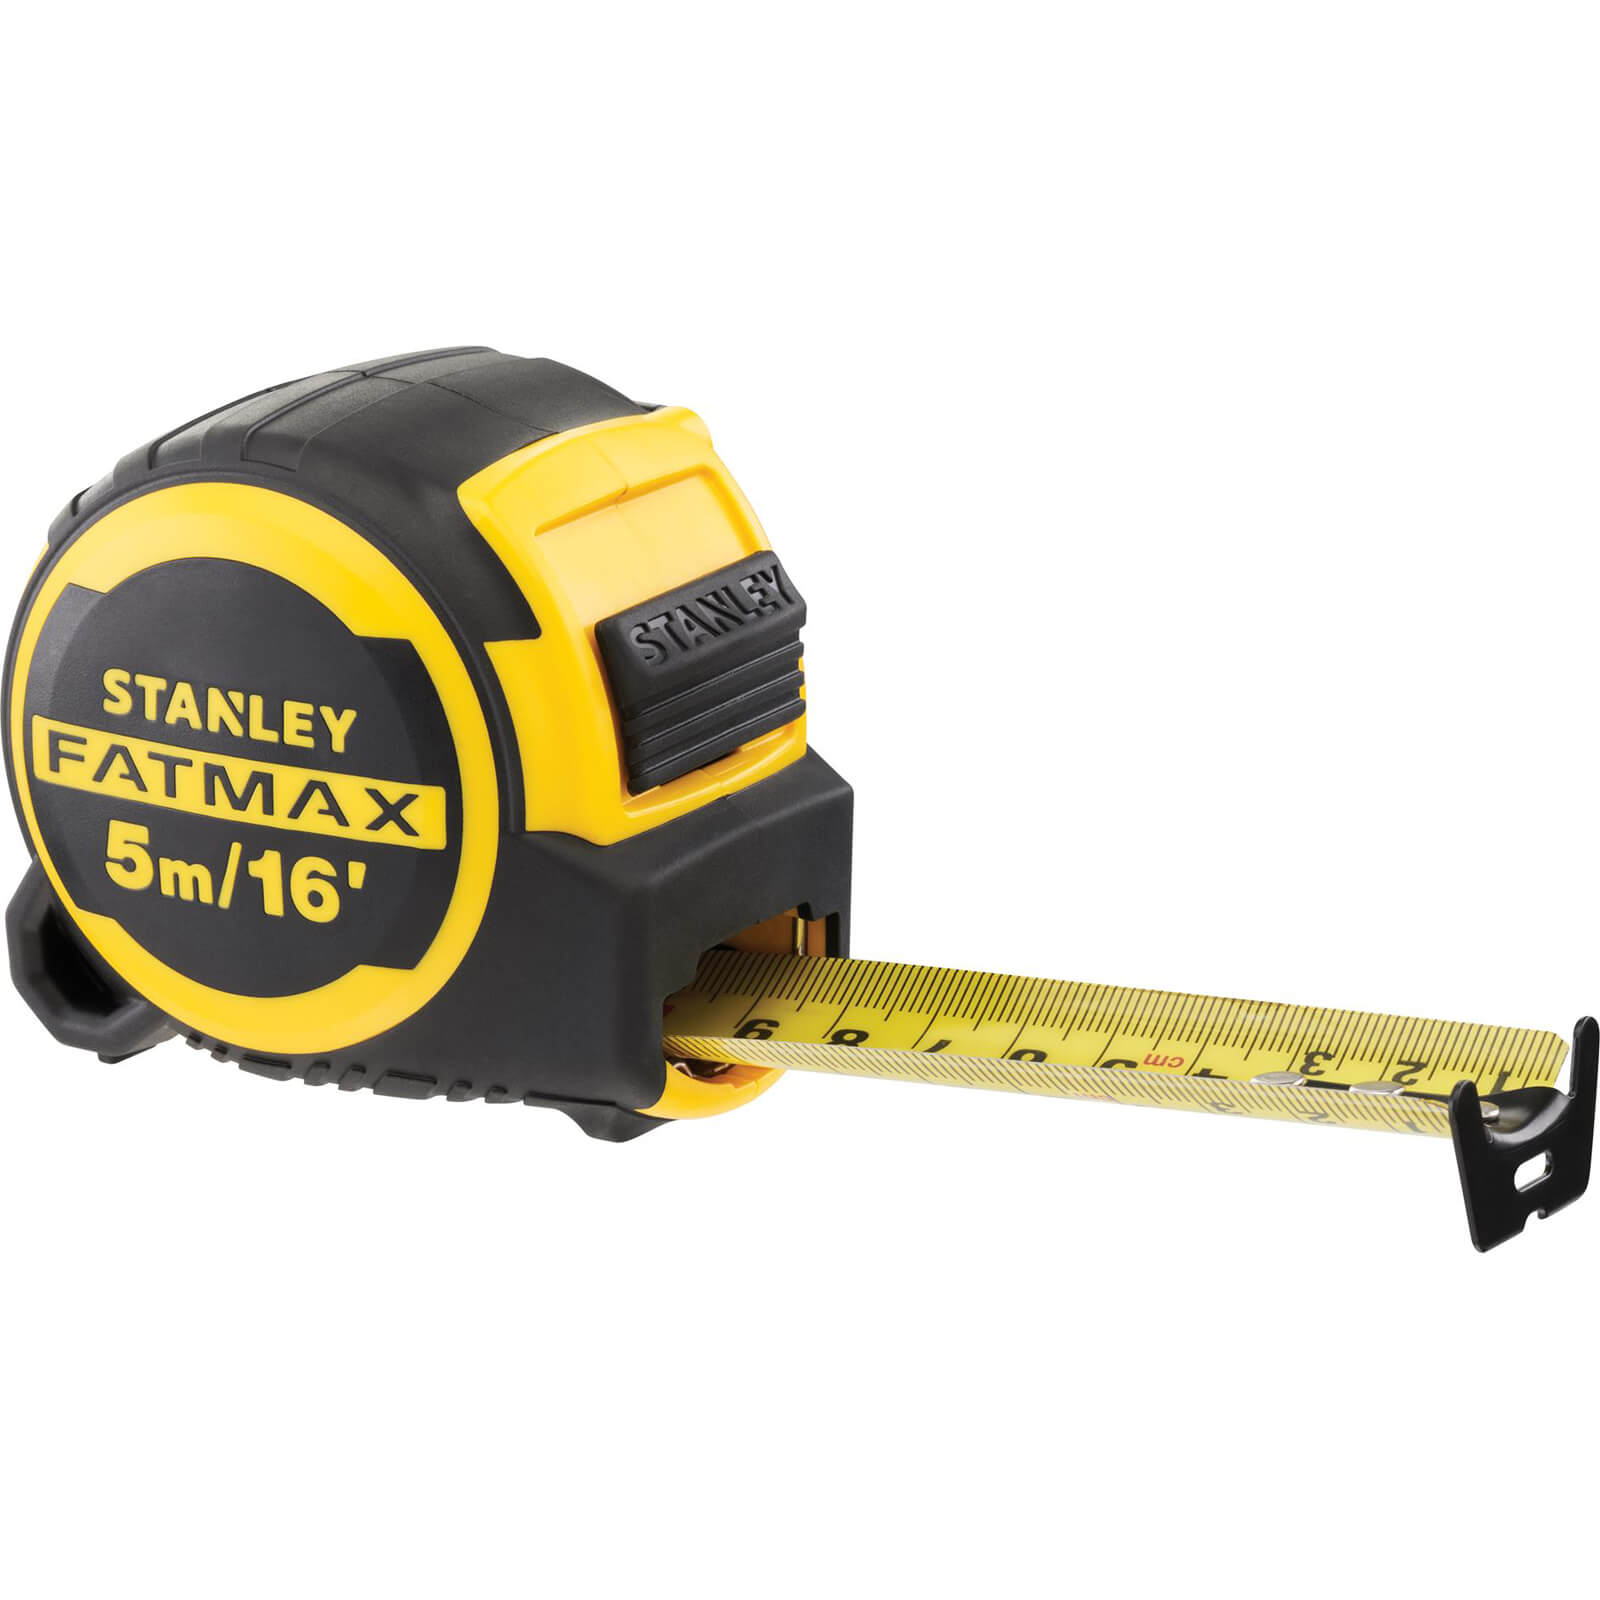 Stanley Fatmax Next Generation Tape Measure Imperial & Metric 16ft / 5m 32mm